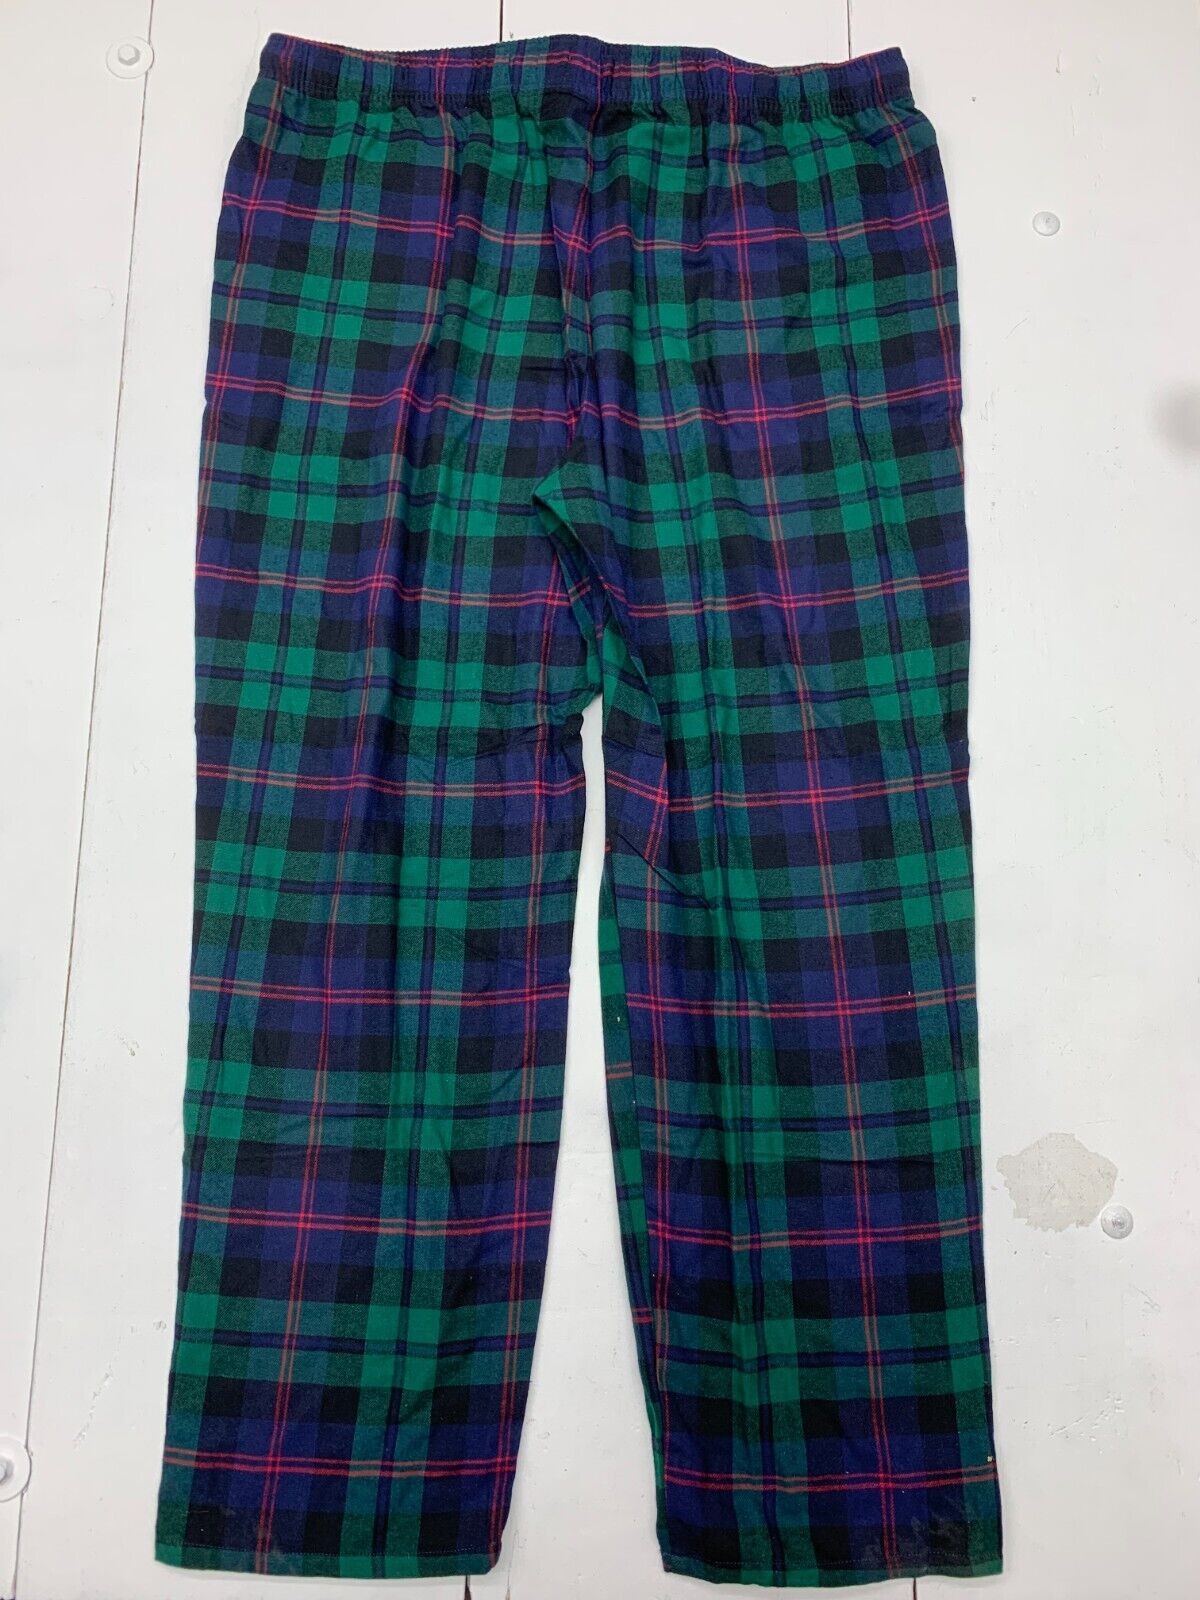 old navy mens blue green plaid pajama pants size xxl - beyond exchange